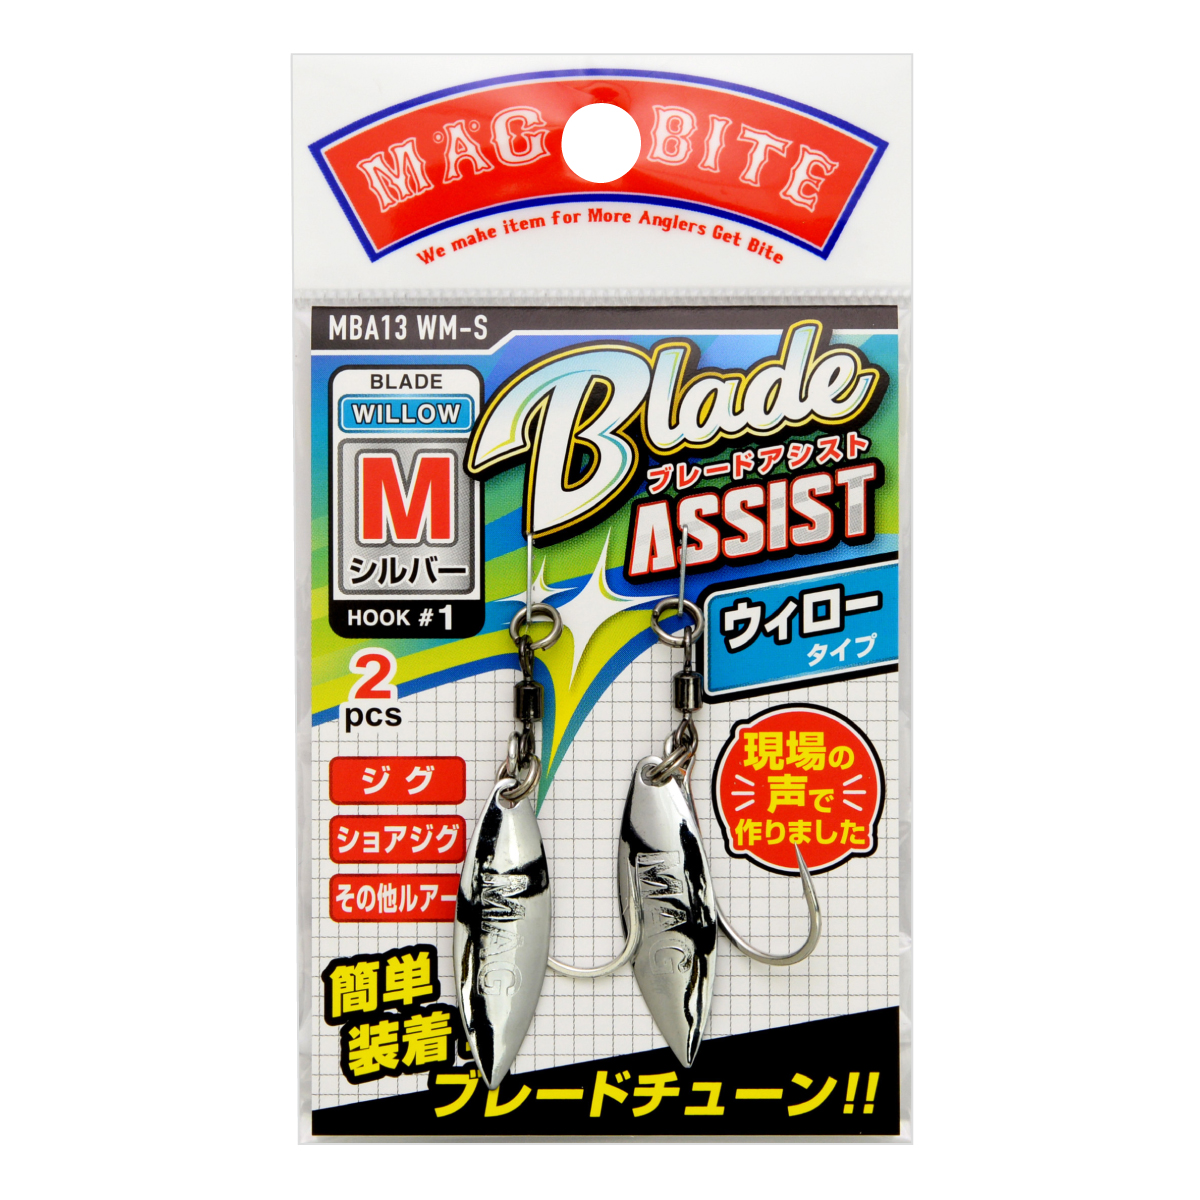 Крючки Magbite MBA13 Blade Assist S willow silver - фото 1